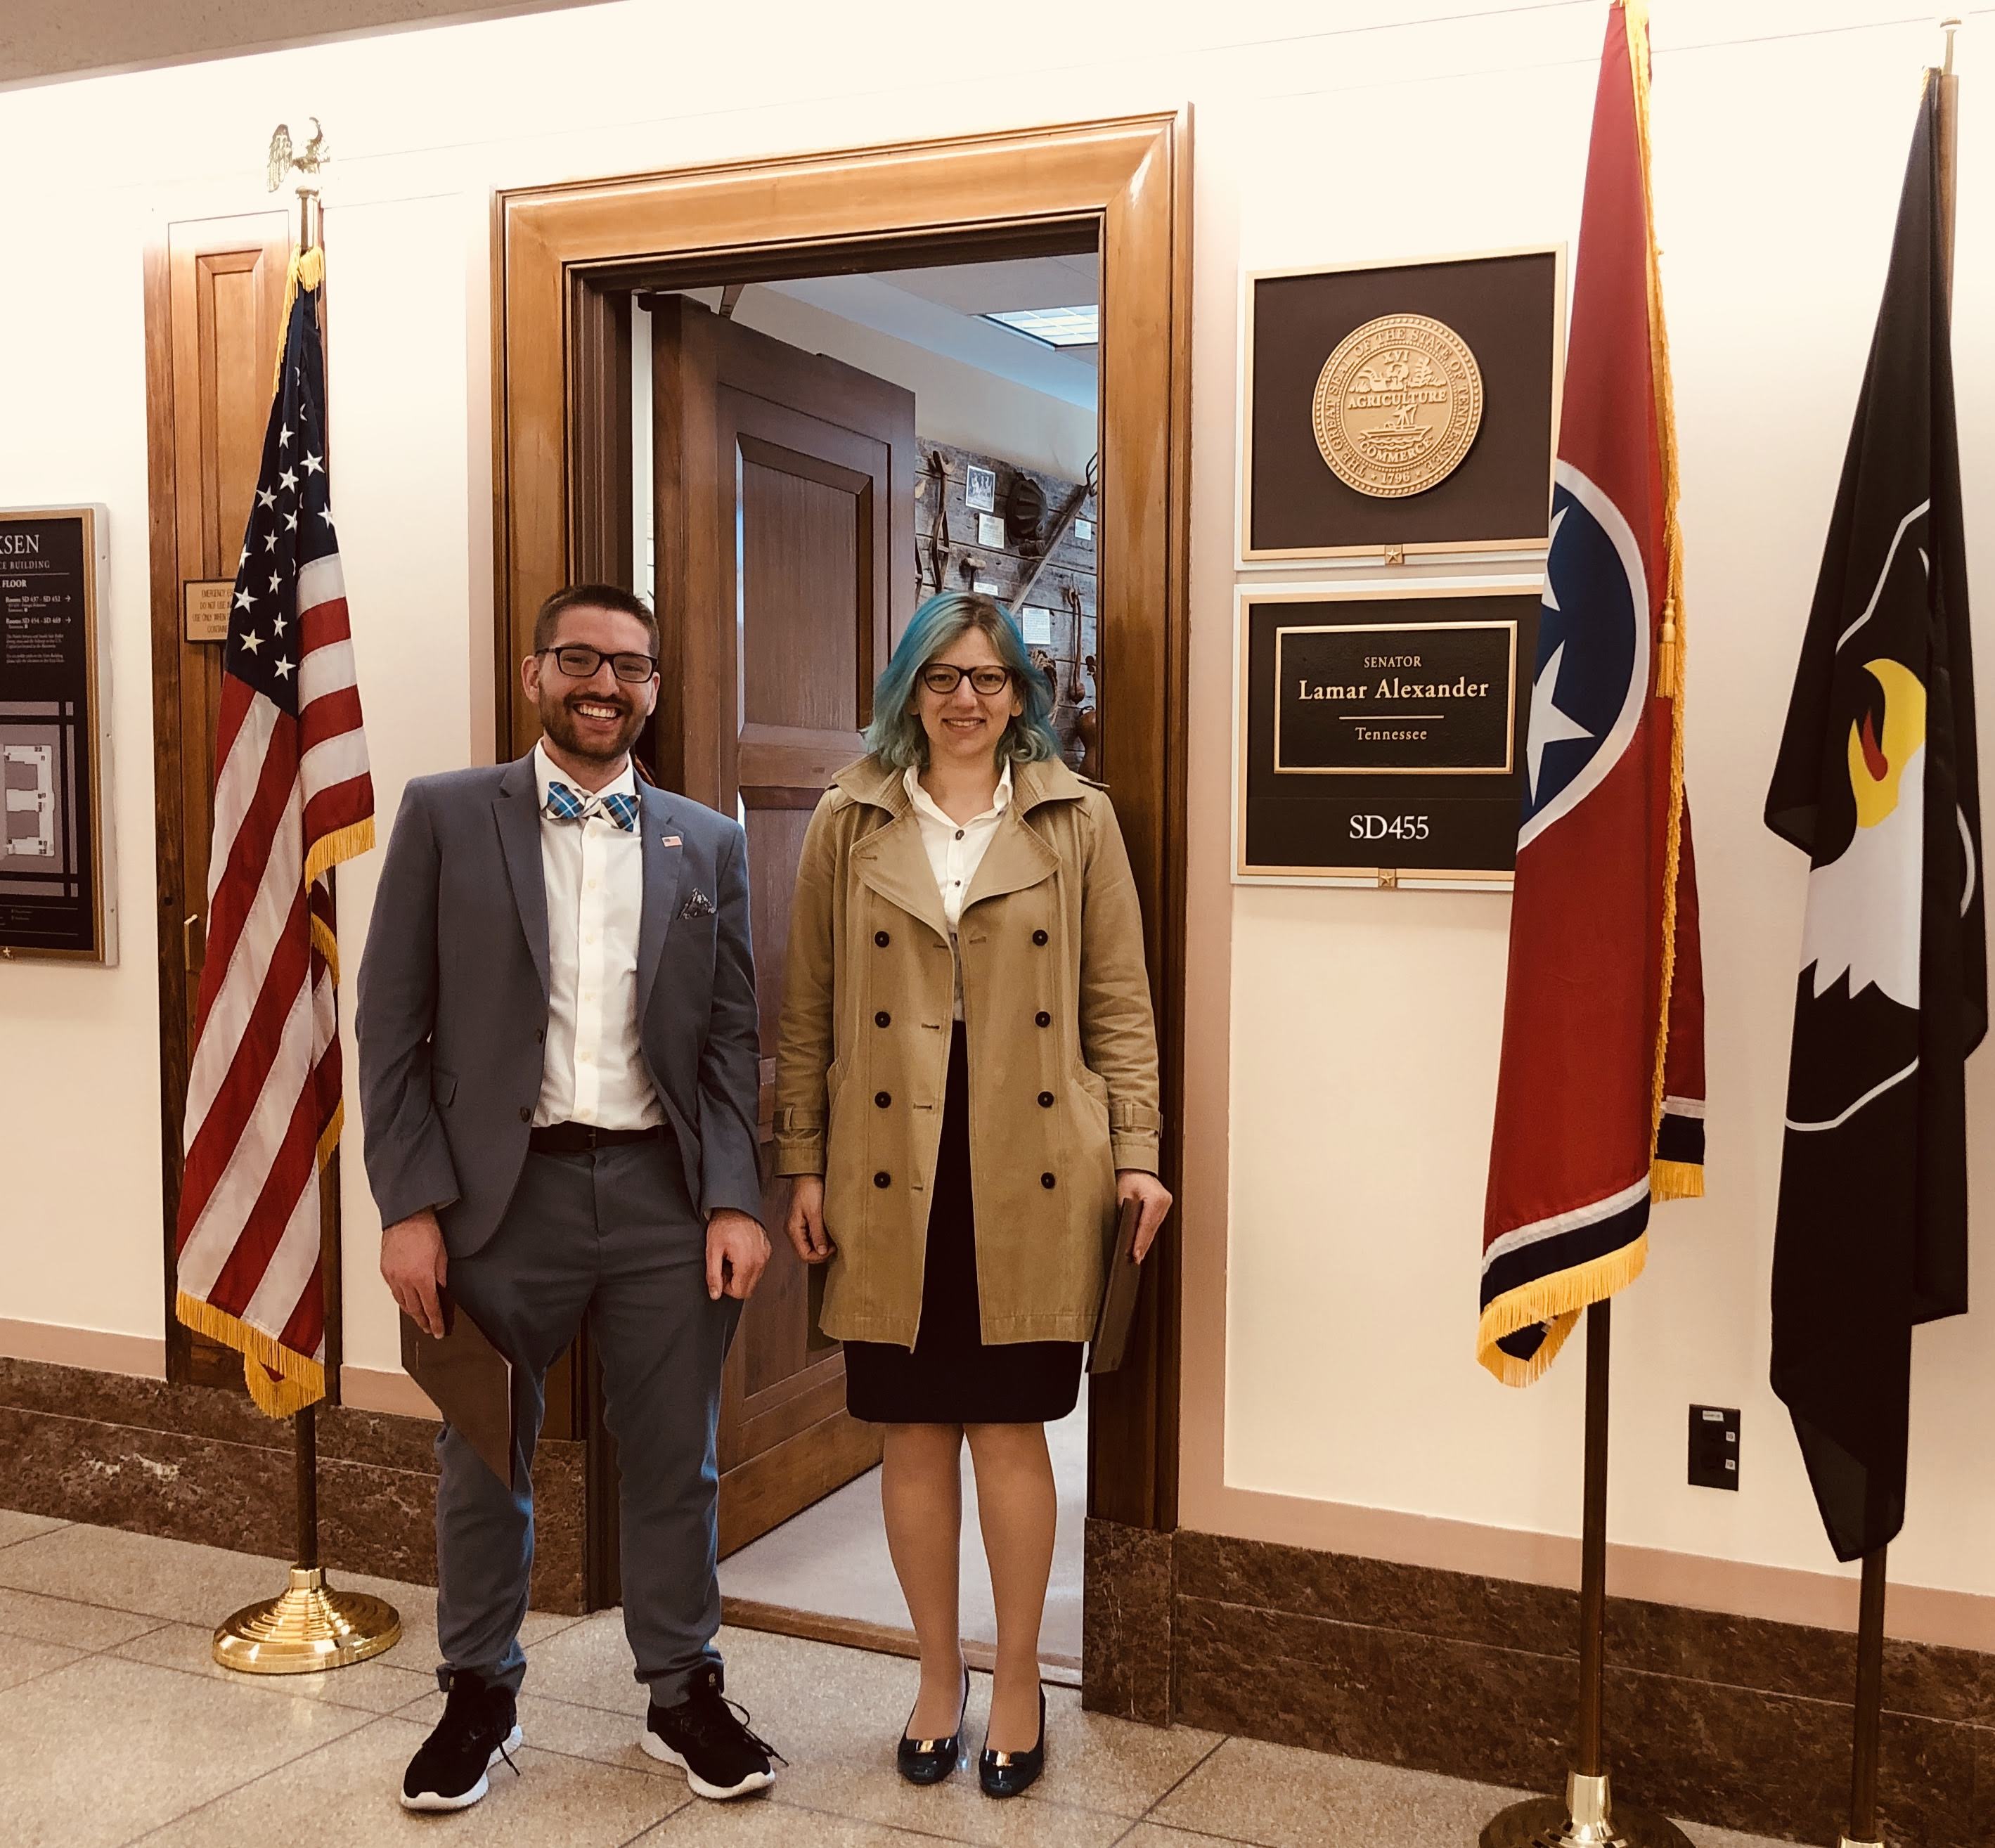 Serena and colleague Willie Boag standing in front of a doorway in Congress.